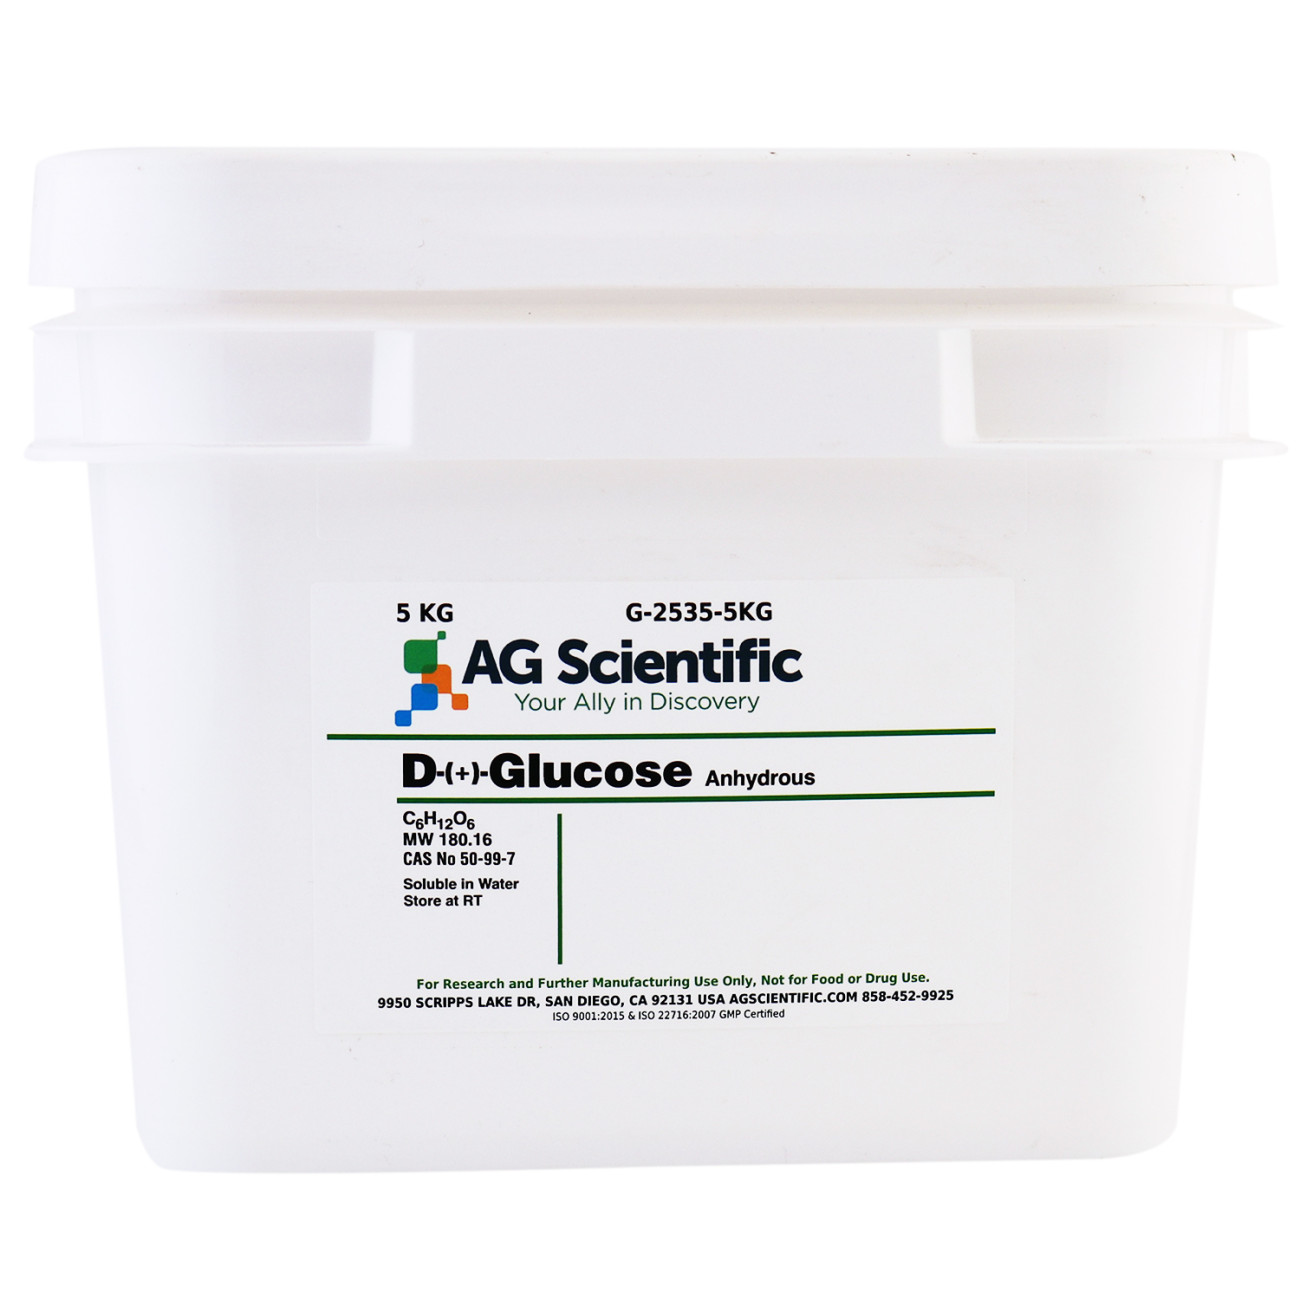 D-(+)-Glucose [Dextrose Anhydrous], USP Grade, 5 KG